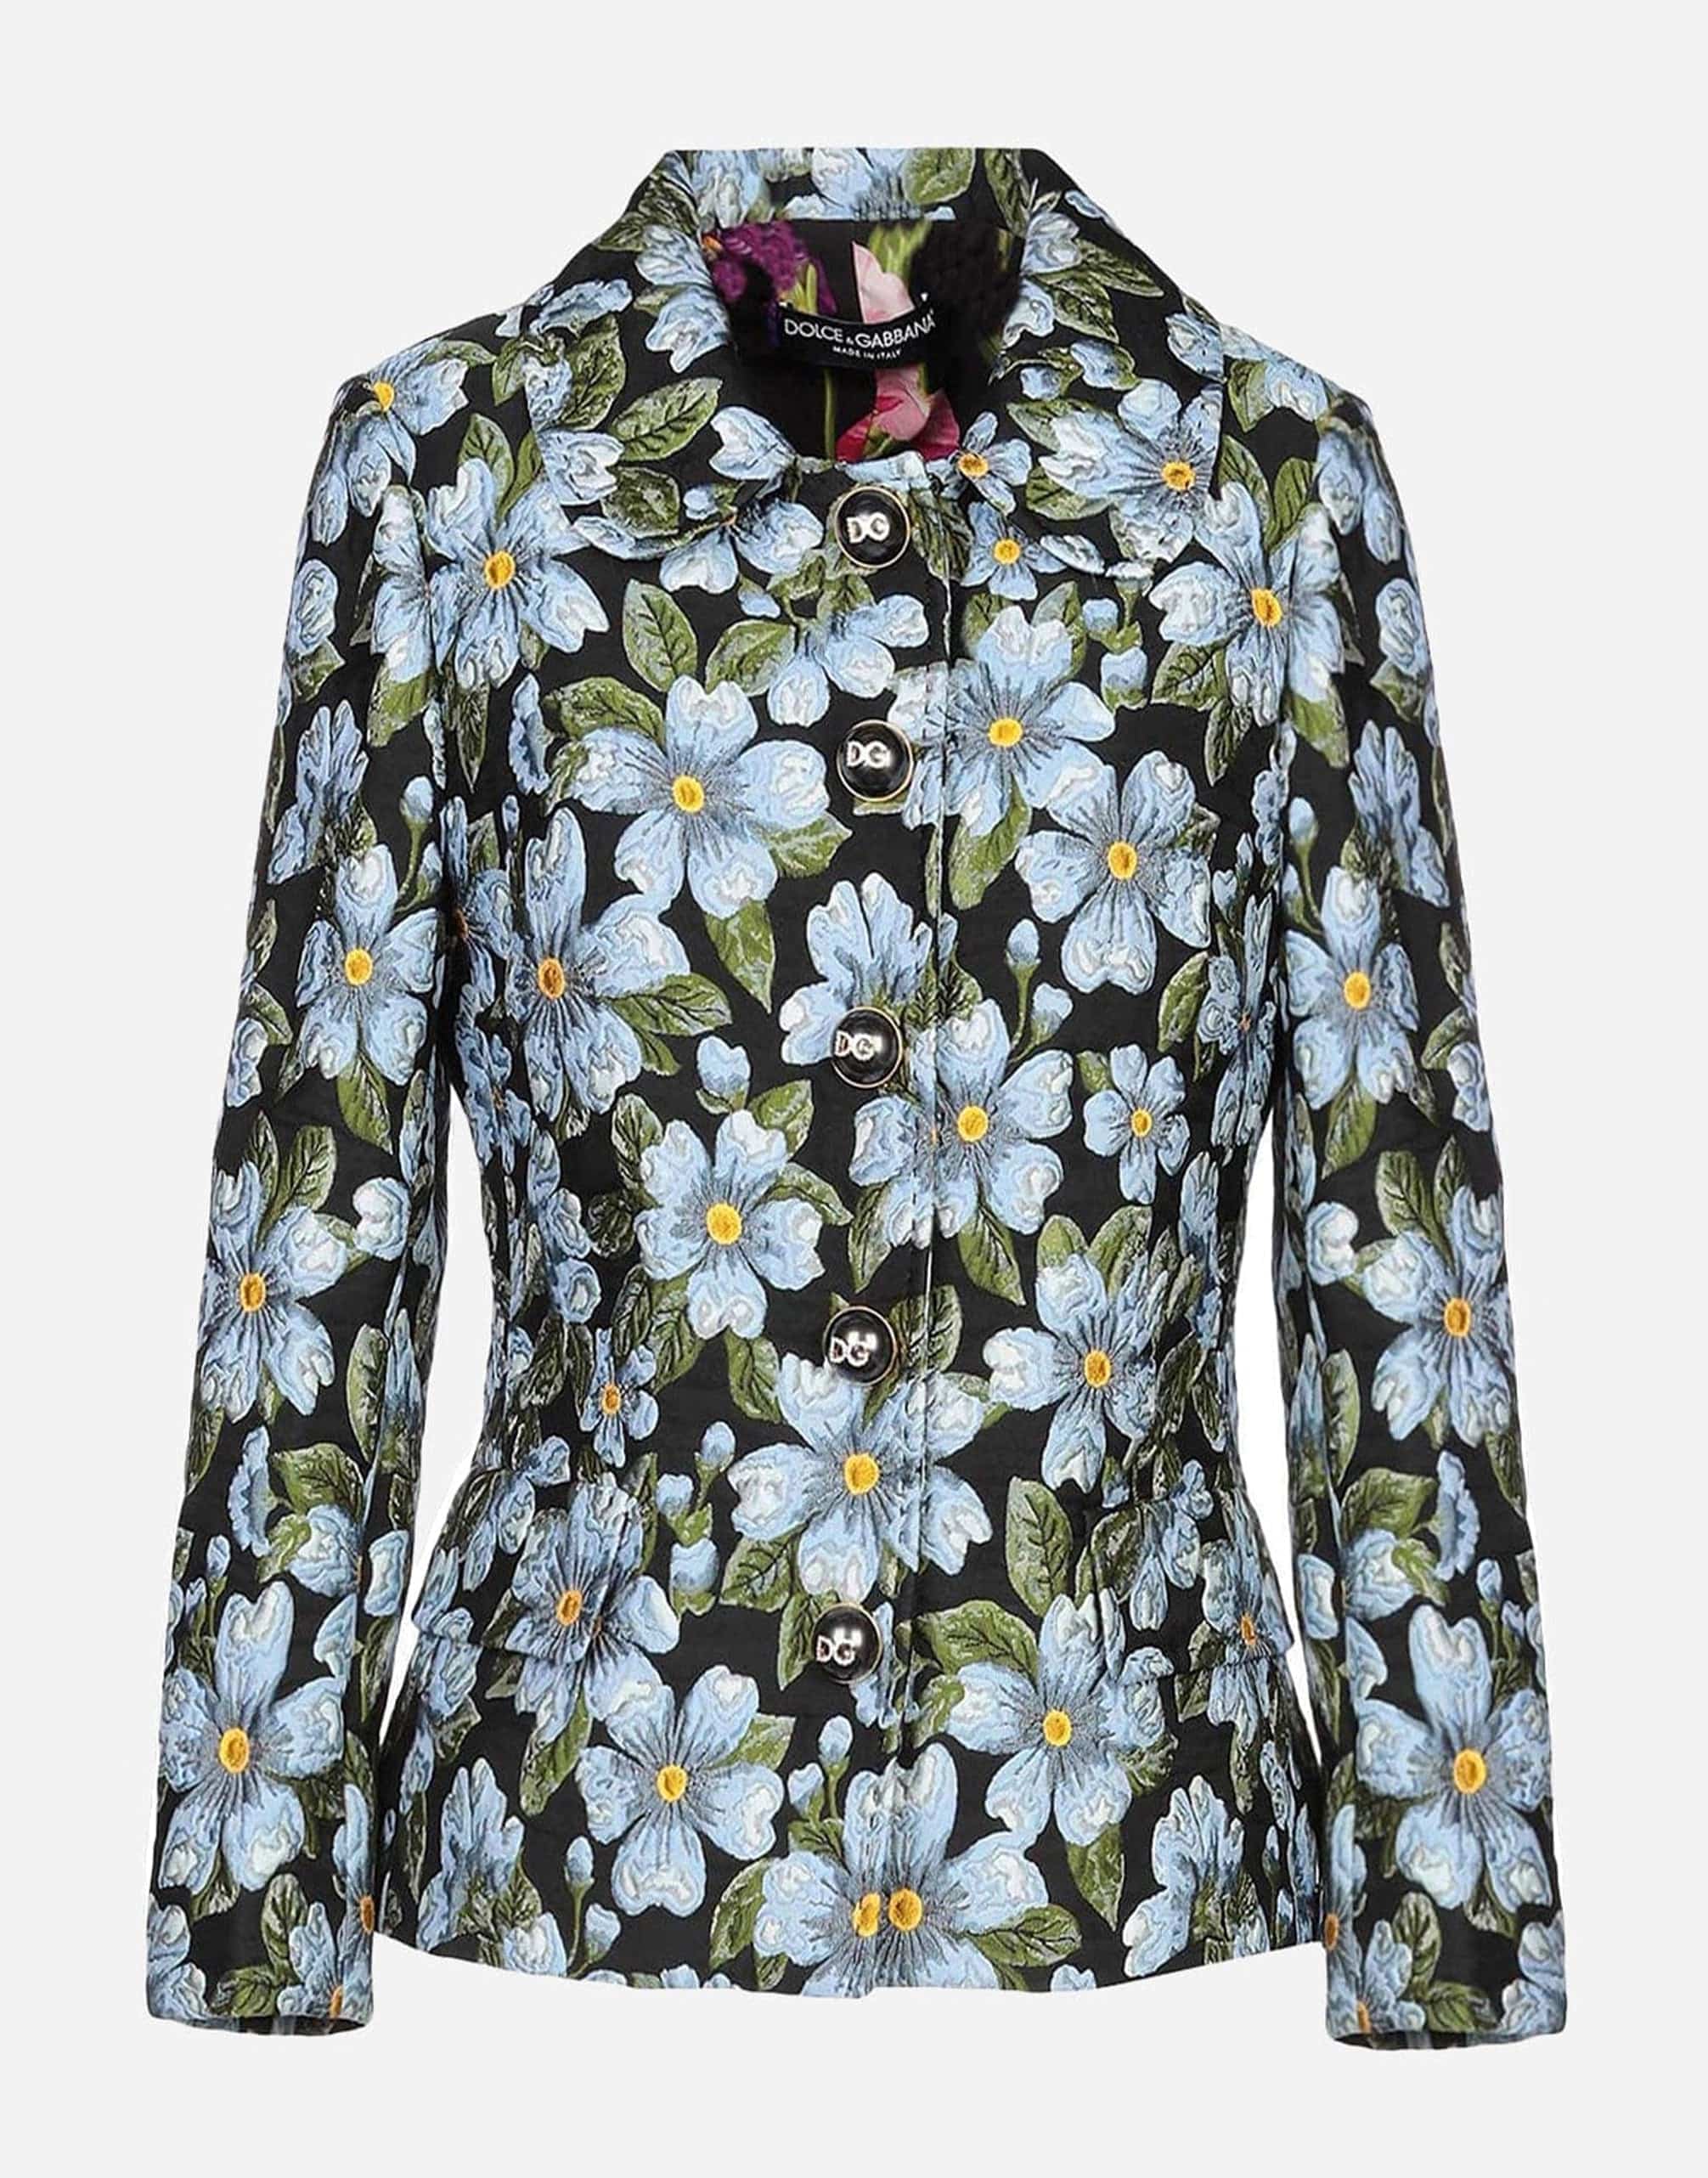 Dolce & Gabbana Floral-Print Jacket